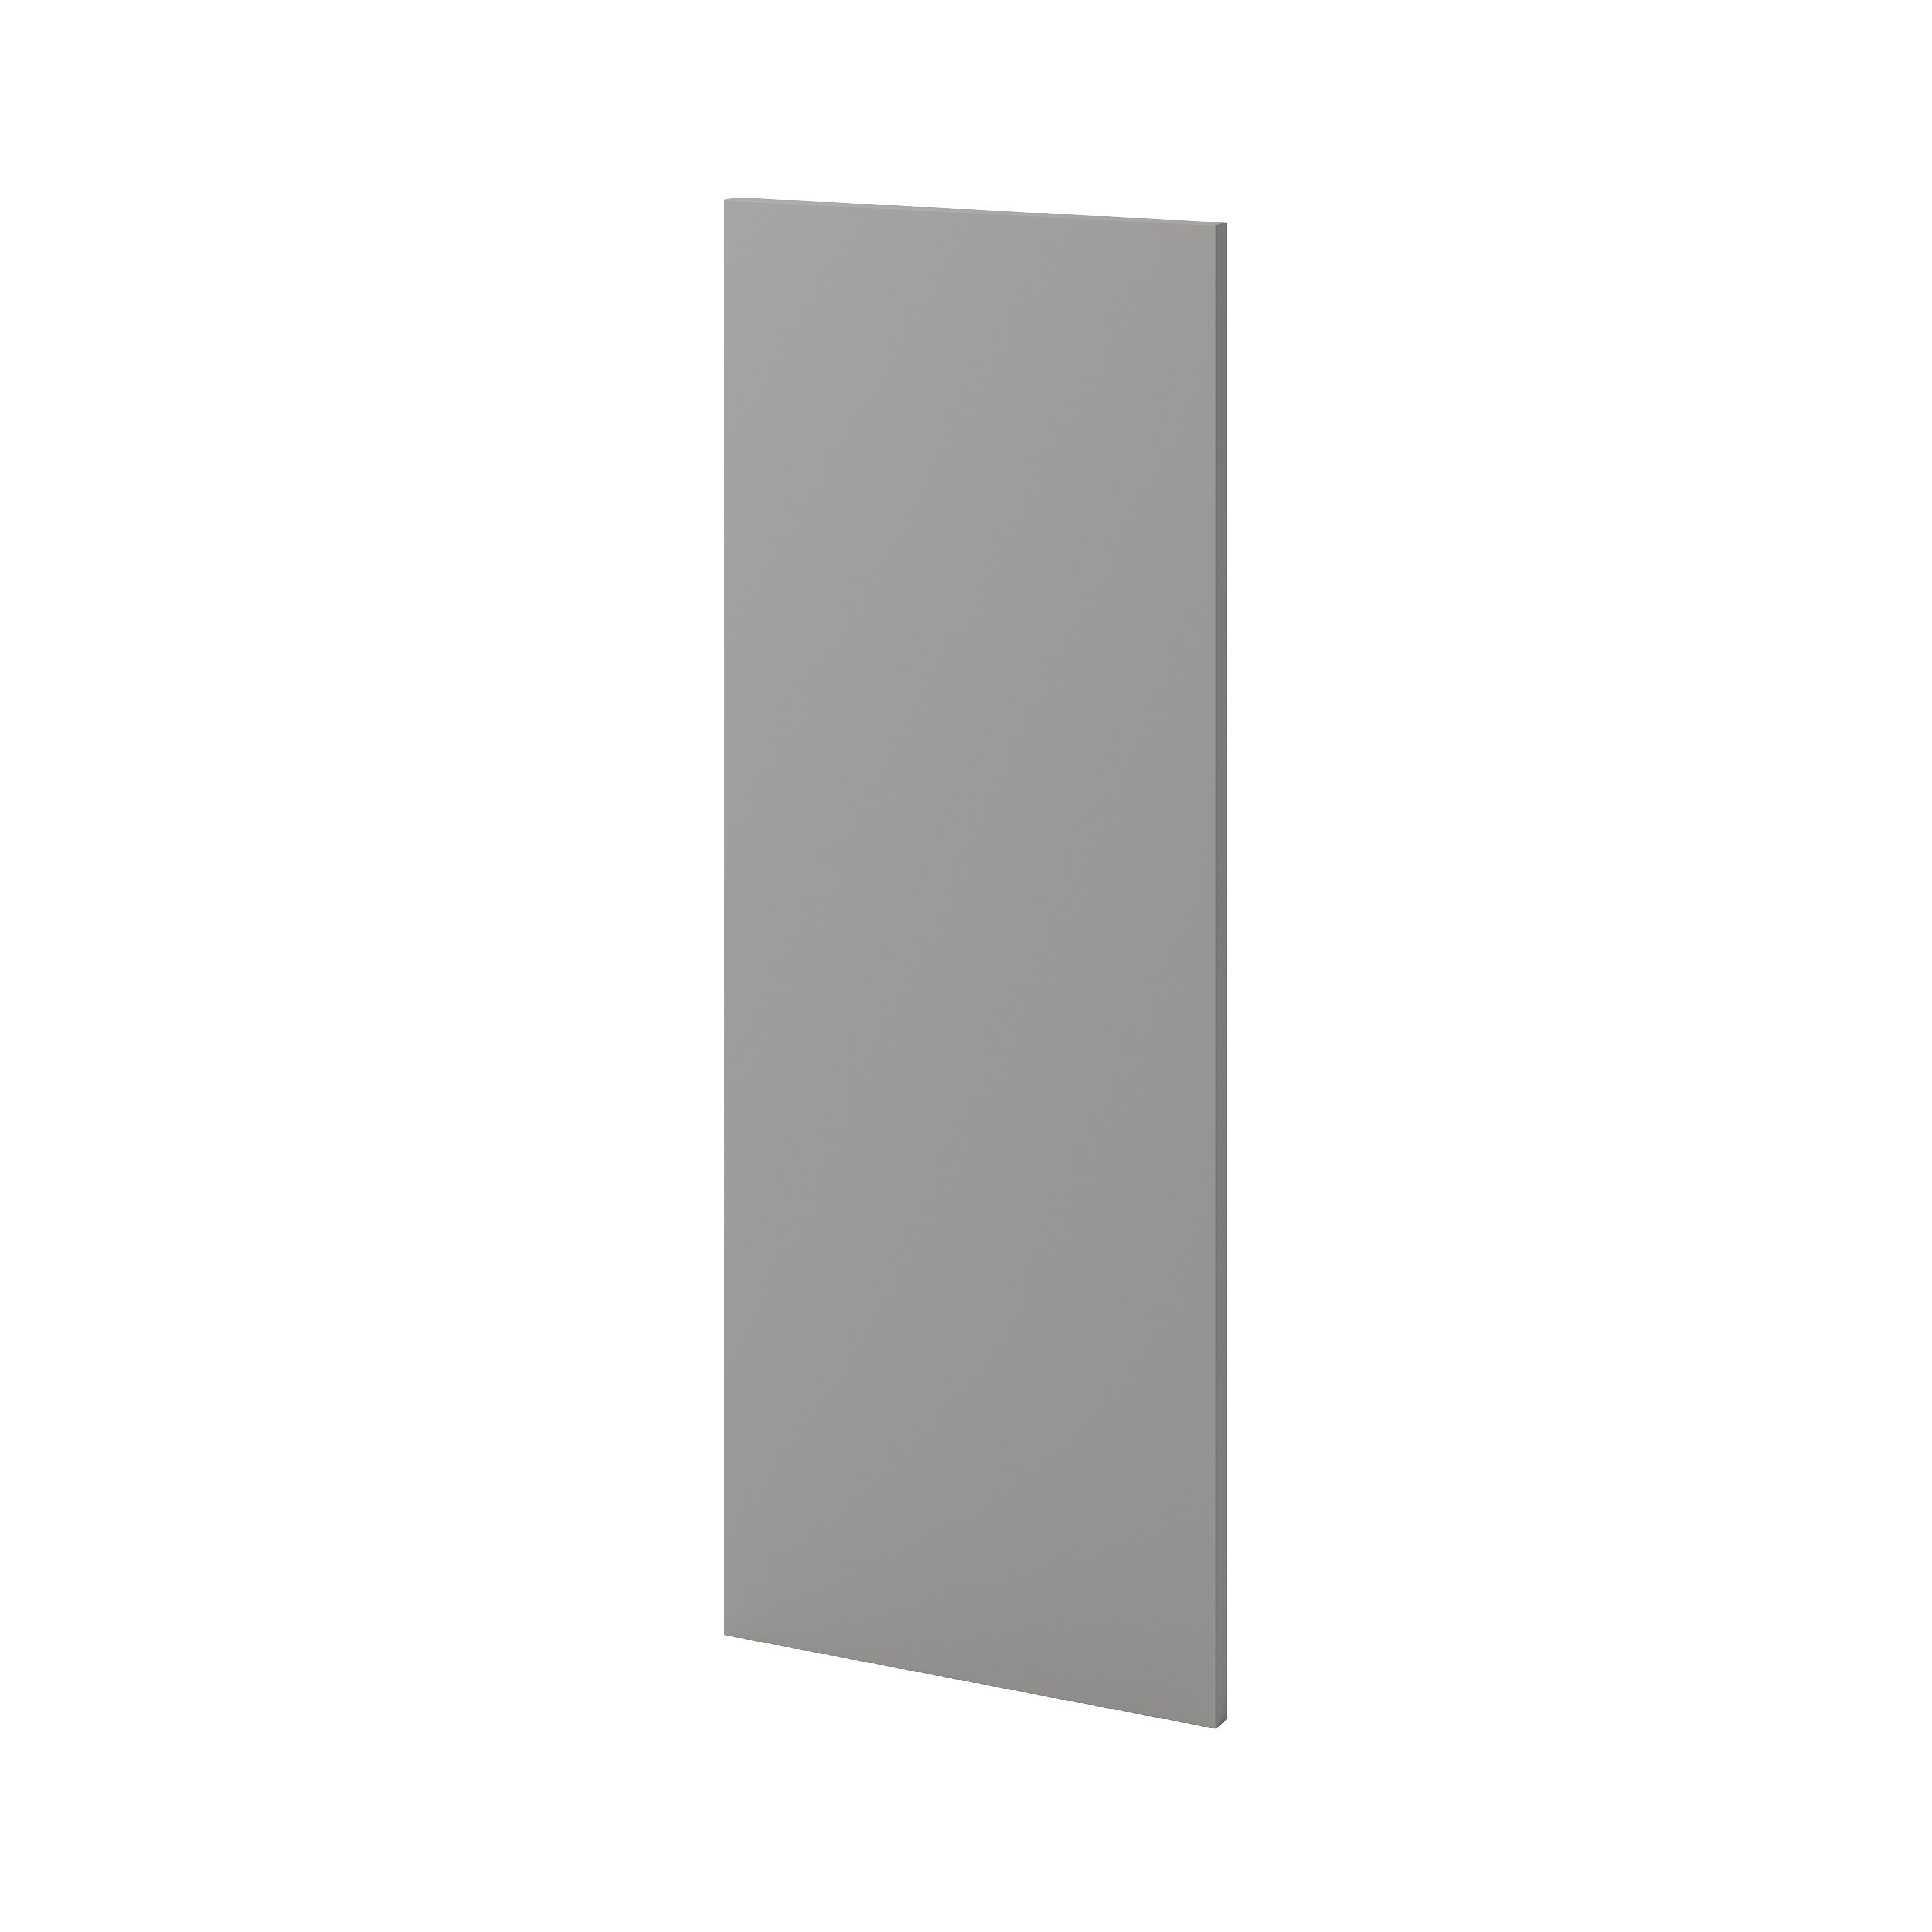 GoodHome Alisma High gloss grey slab Standard Wall Clad on end panel (H)960mm (W)360mm